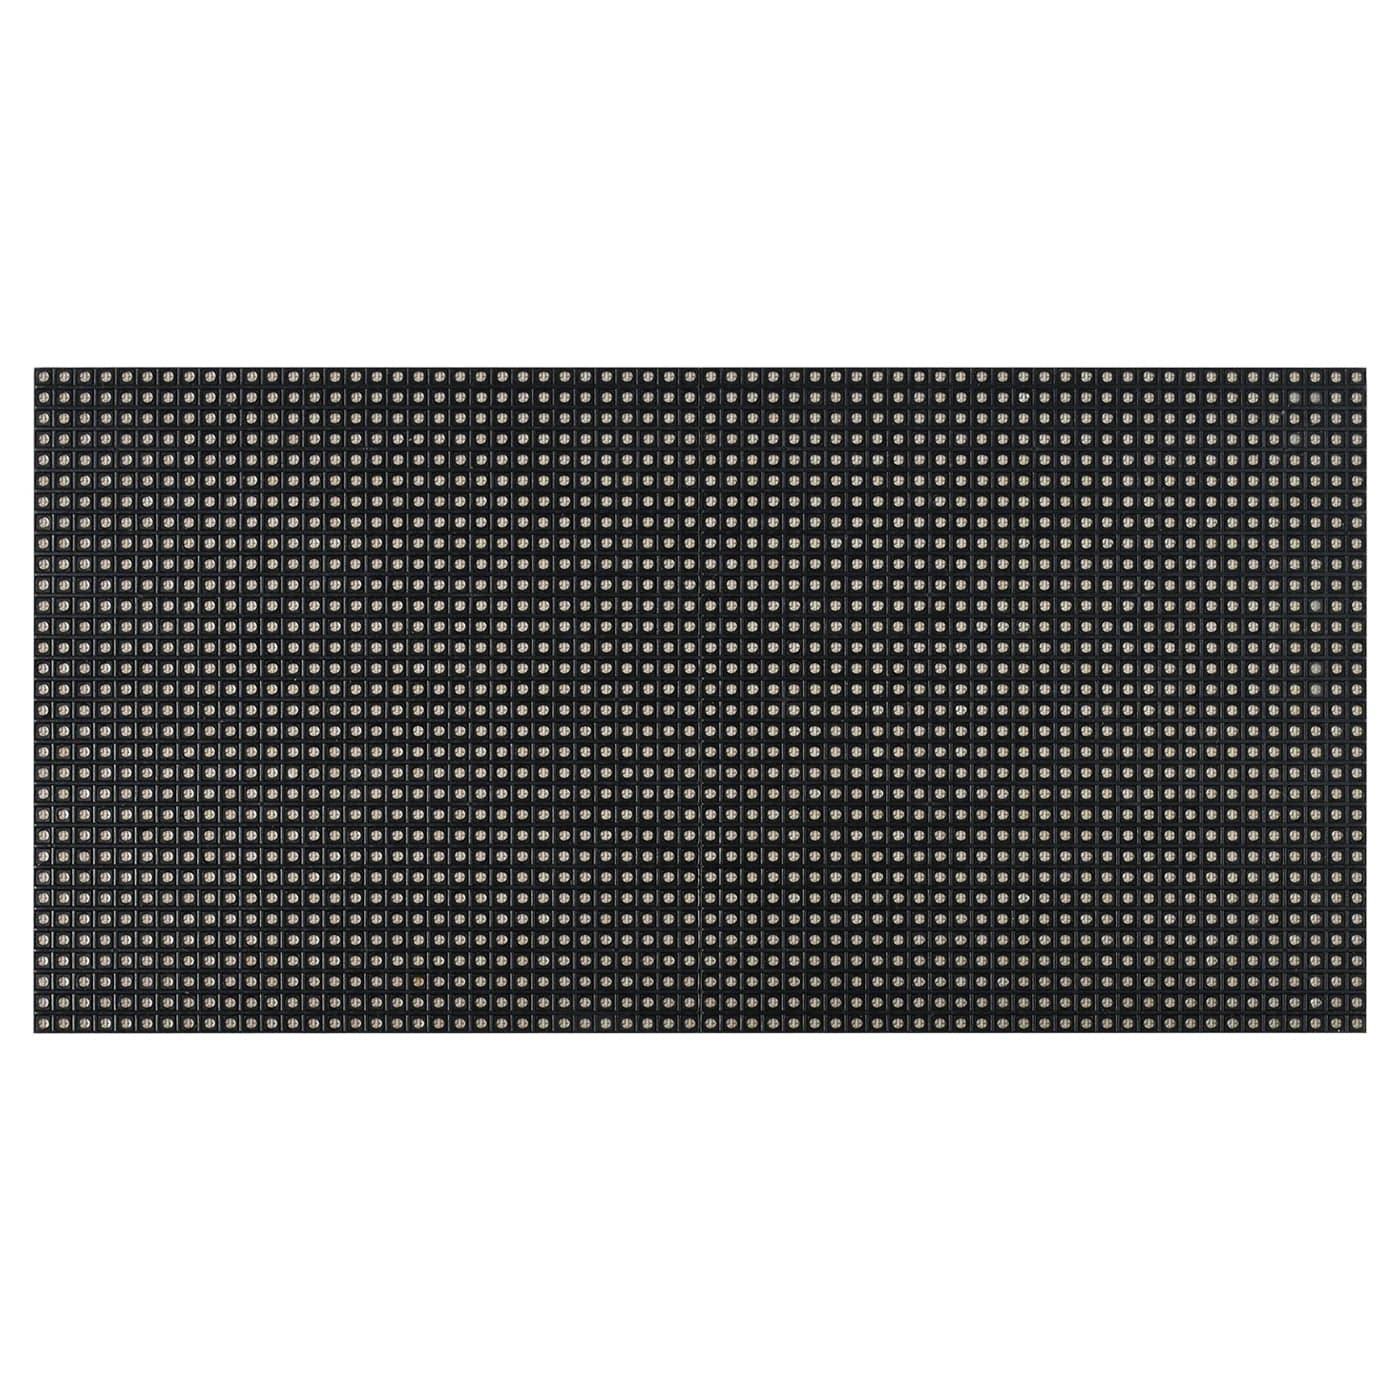 RGB Full-Colour LED Matrix Panel - 3mm Pitch, 64x32 Pixels - The Pi Hut